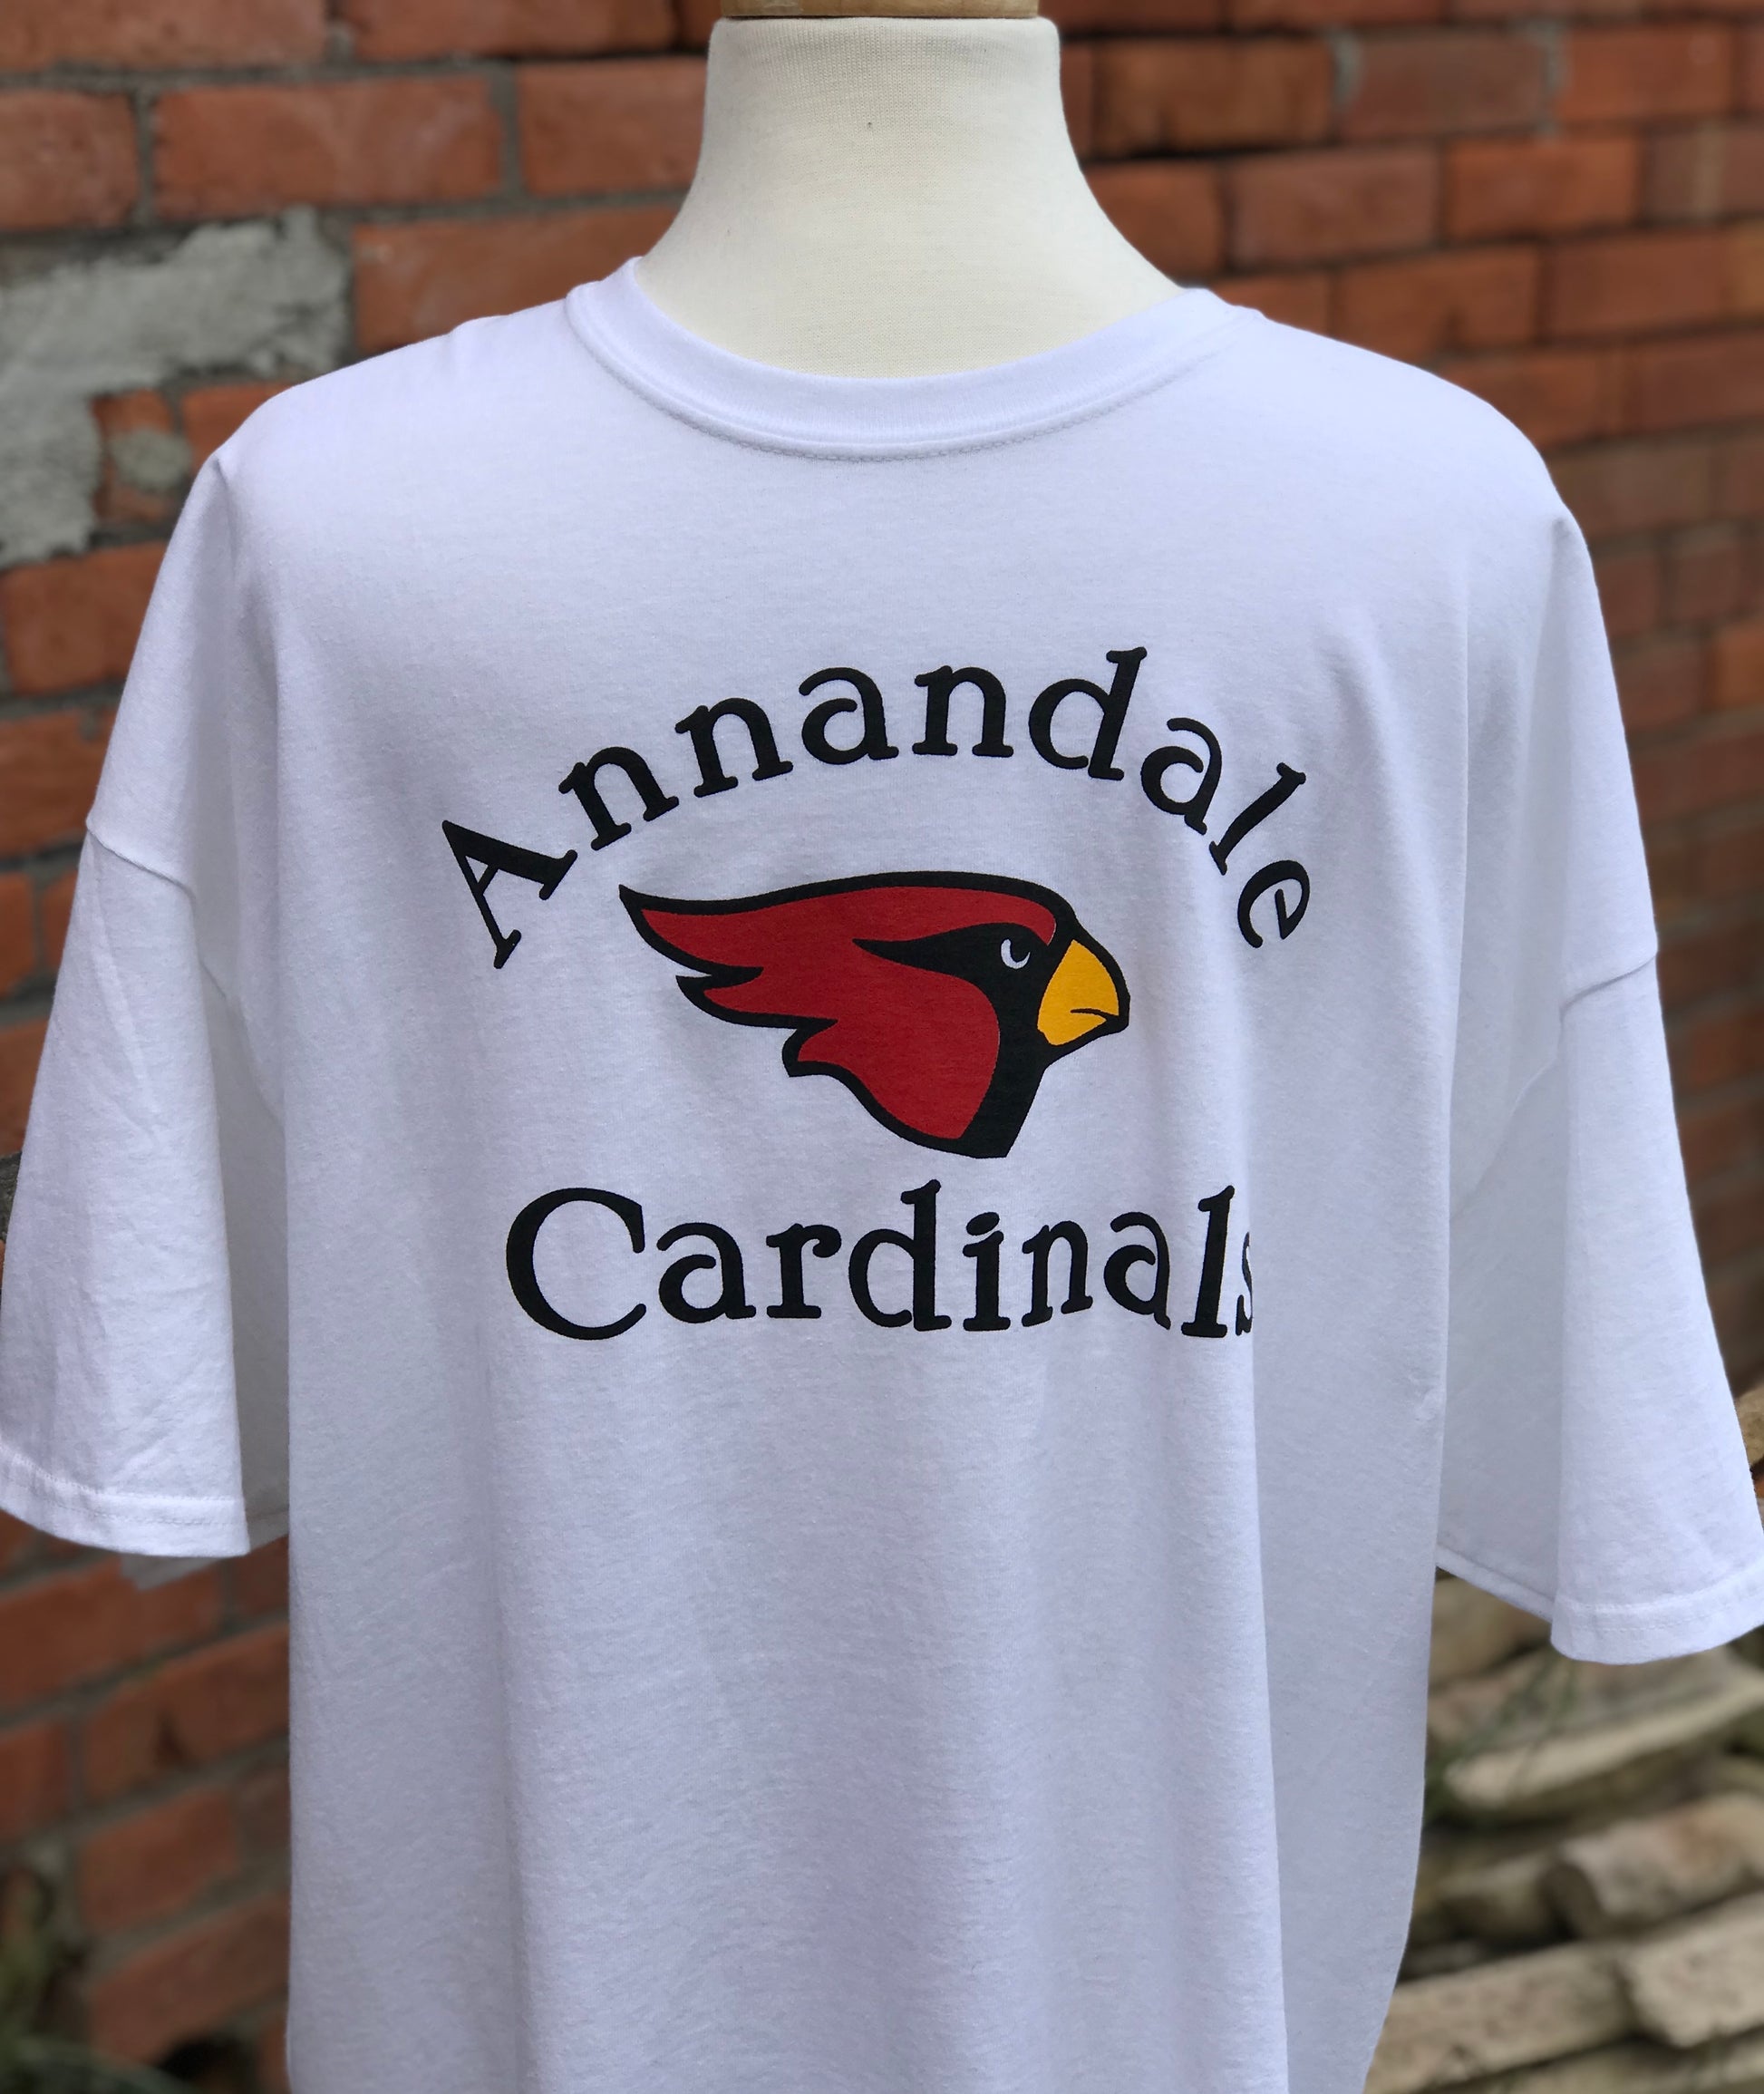 cardinal shirts on sale